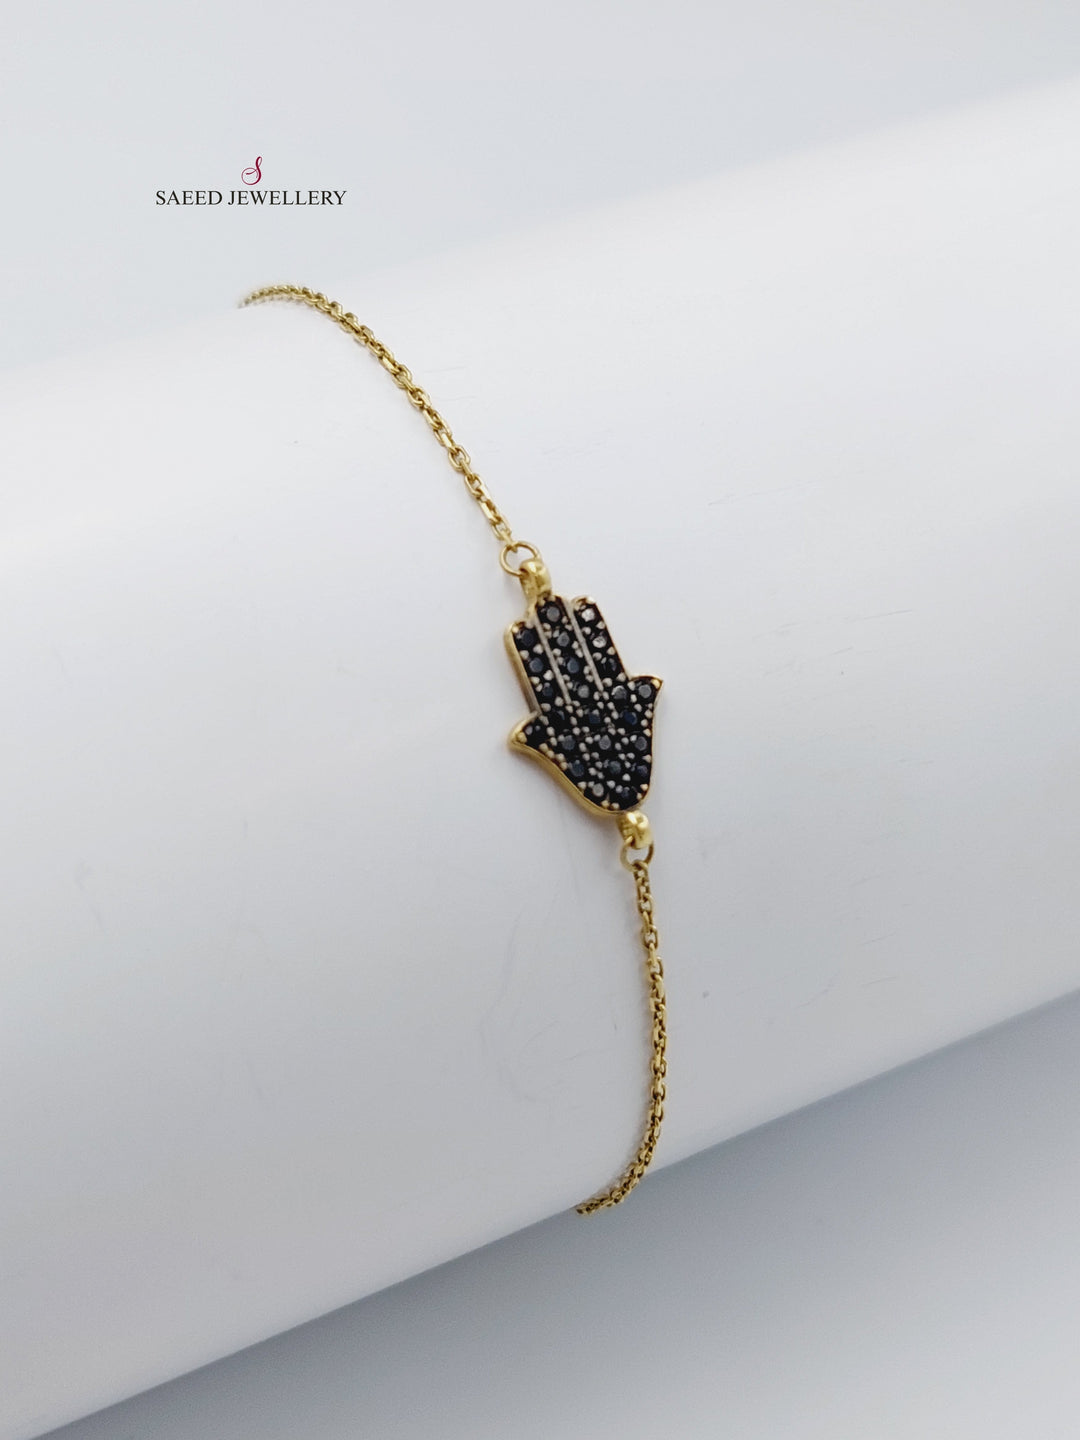 18K Gold Kaf Bracelet by Saeed Jewelry - Image 1